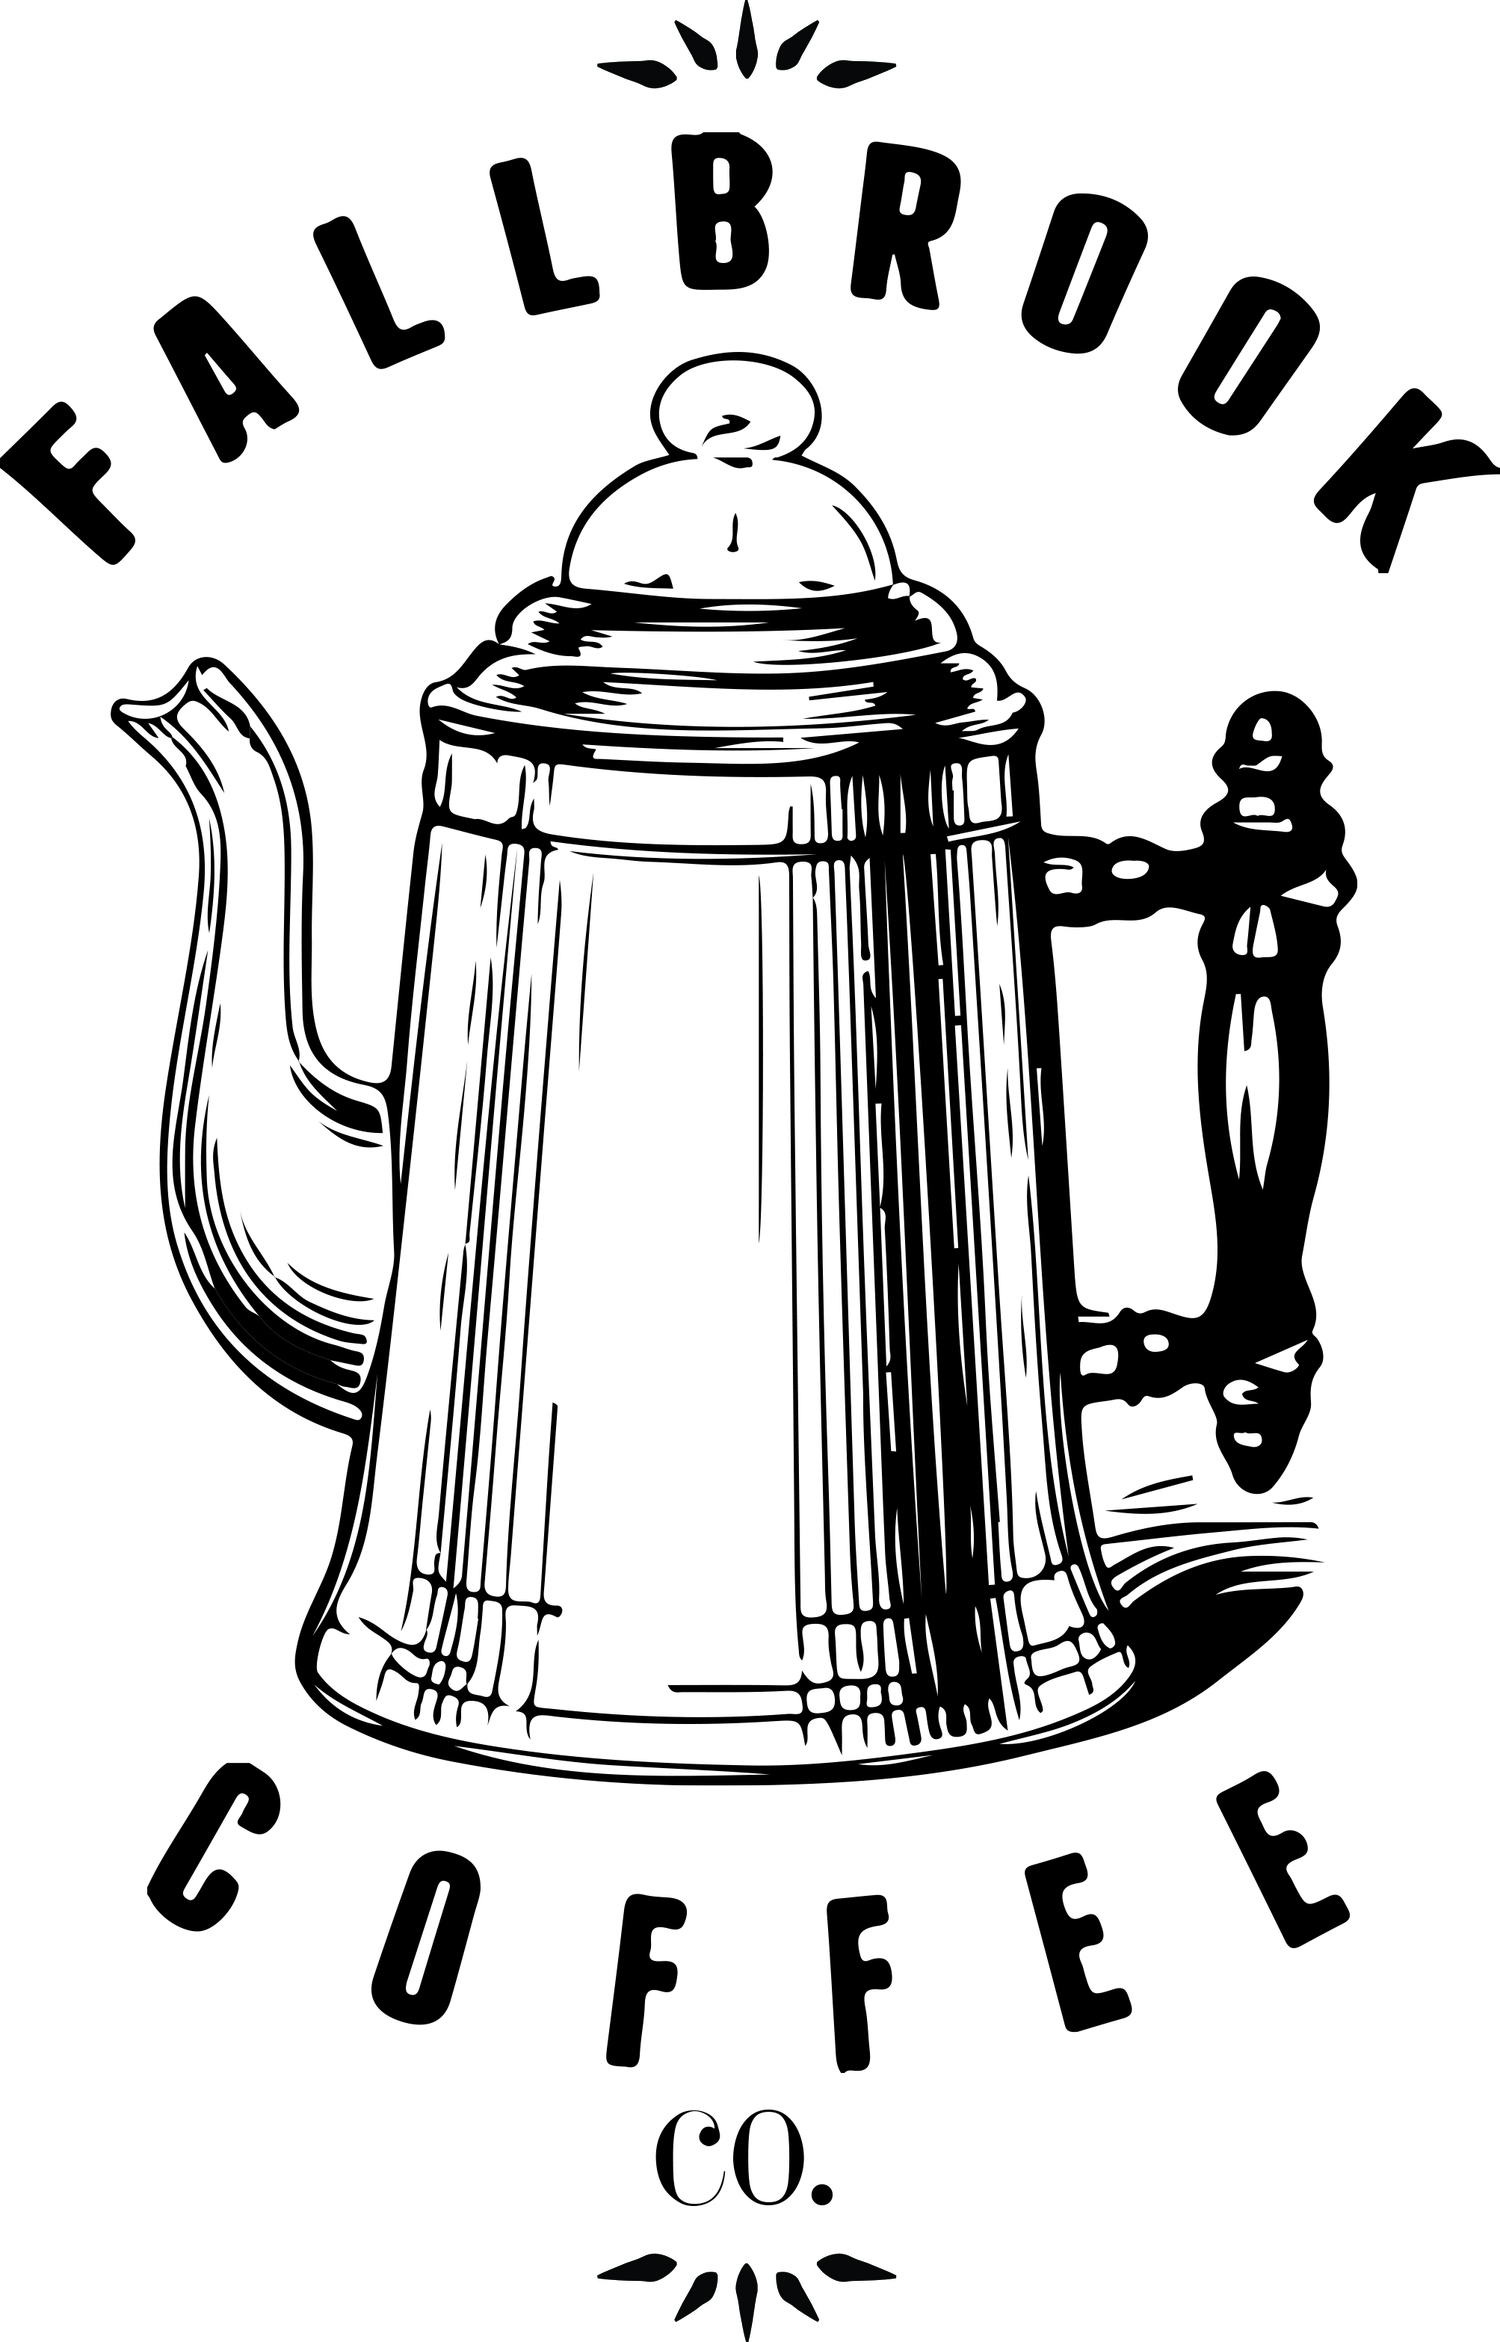 Fallbrook Coffee Company